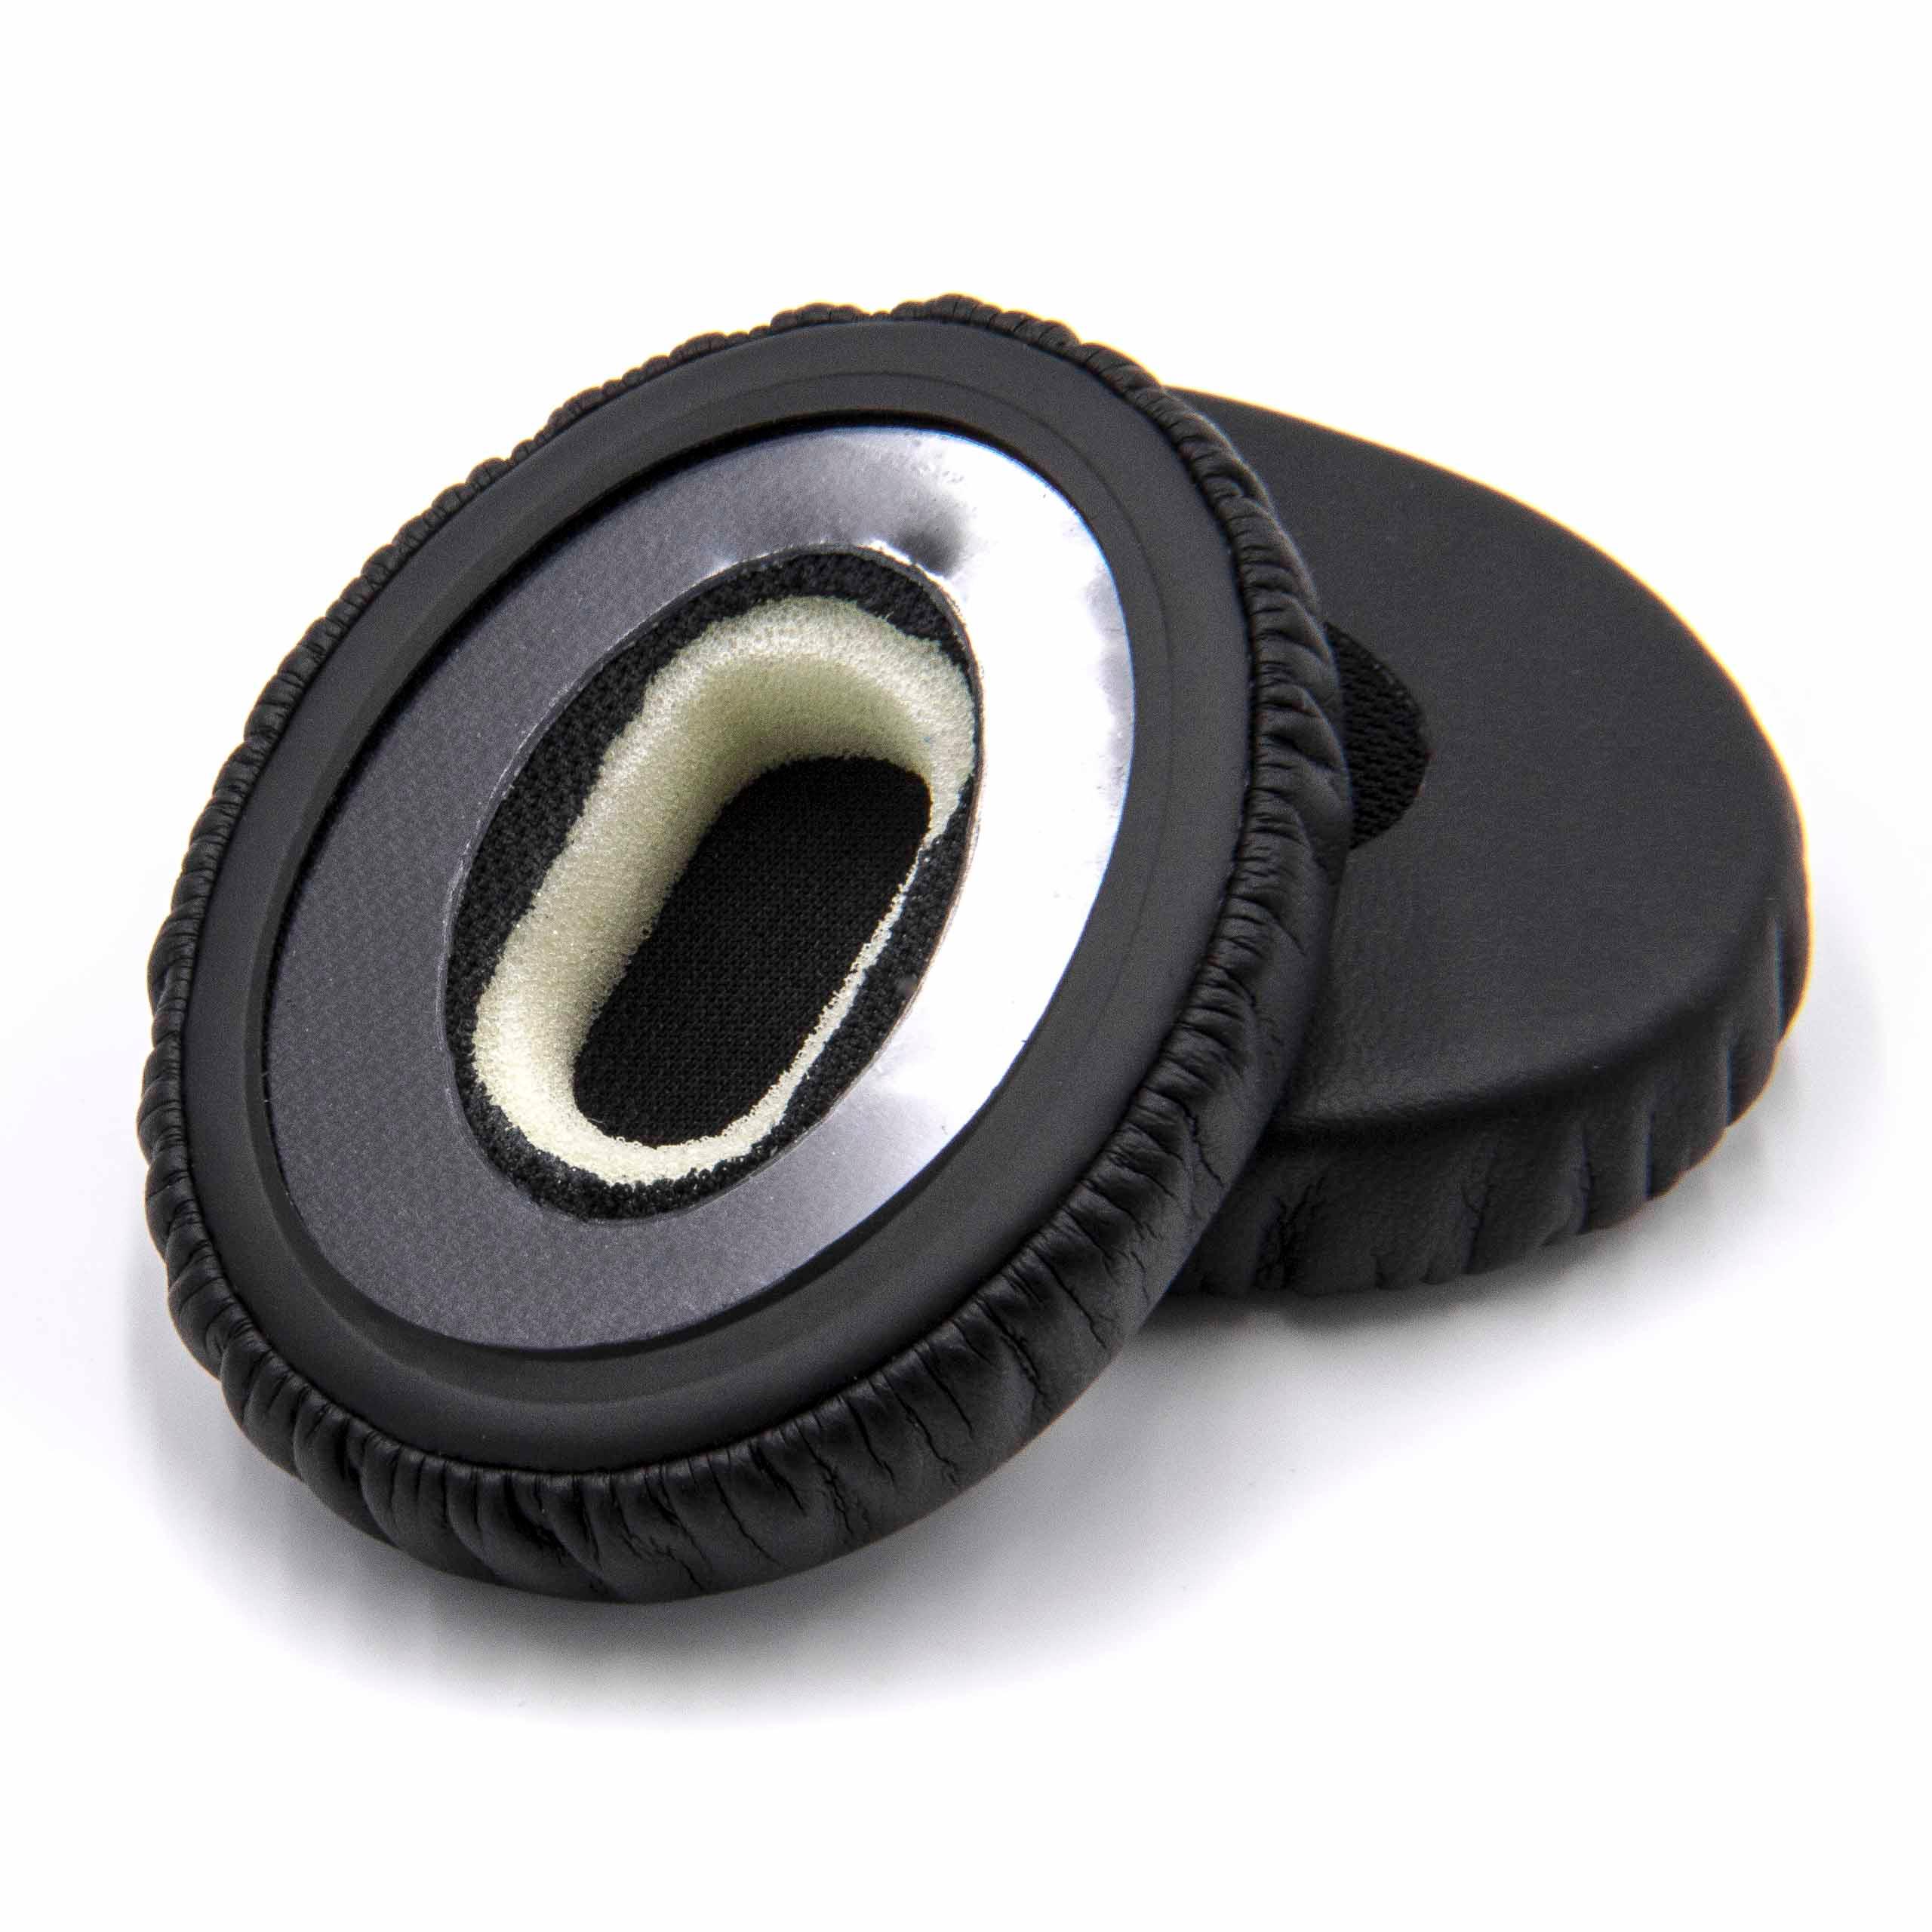 2x Almohadilla para auriculares Bose OnEar 2i, OE2, OE2i, 2 - fibra sintética negro, 5,6cm